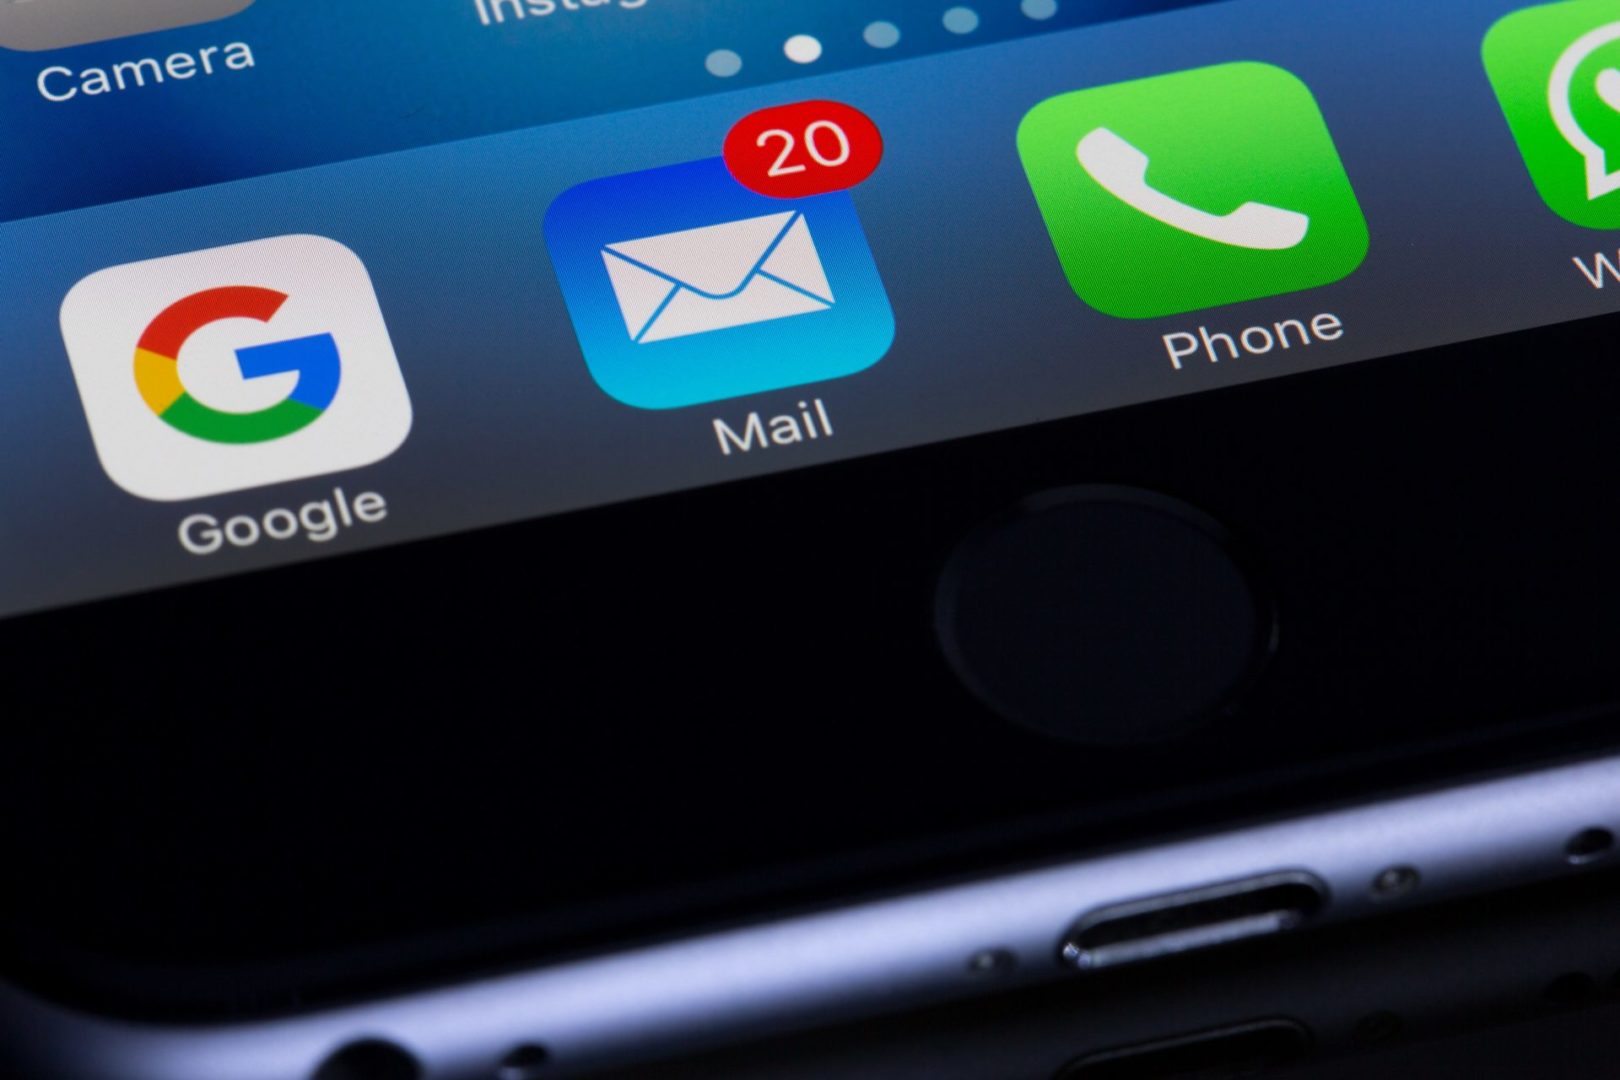 inbox showing 20 unread emails